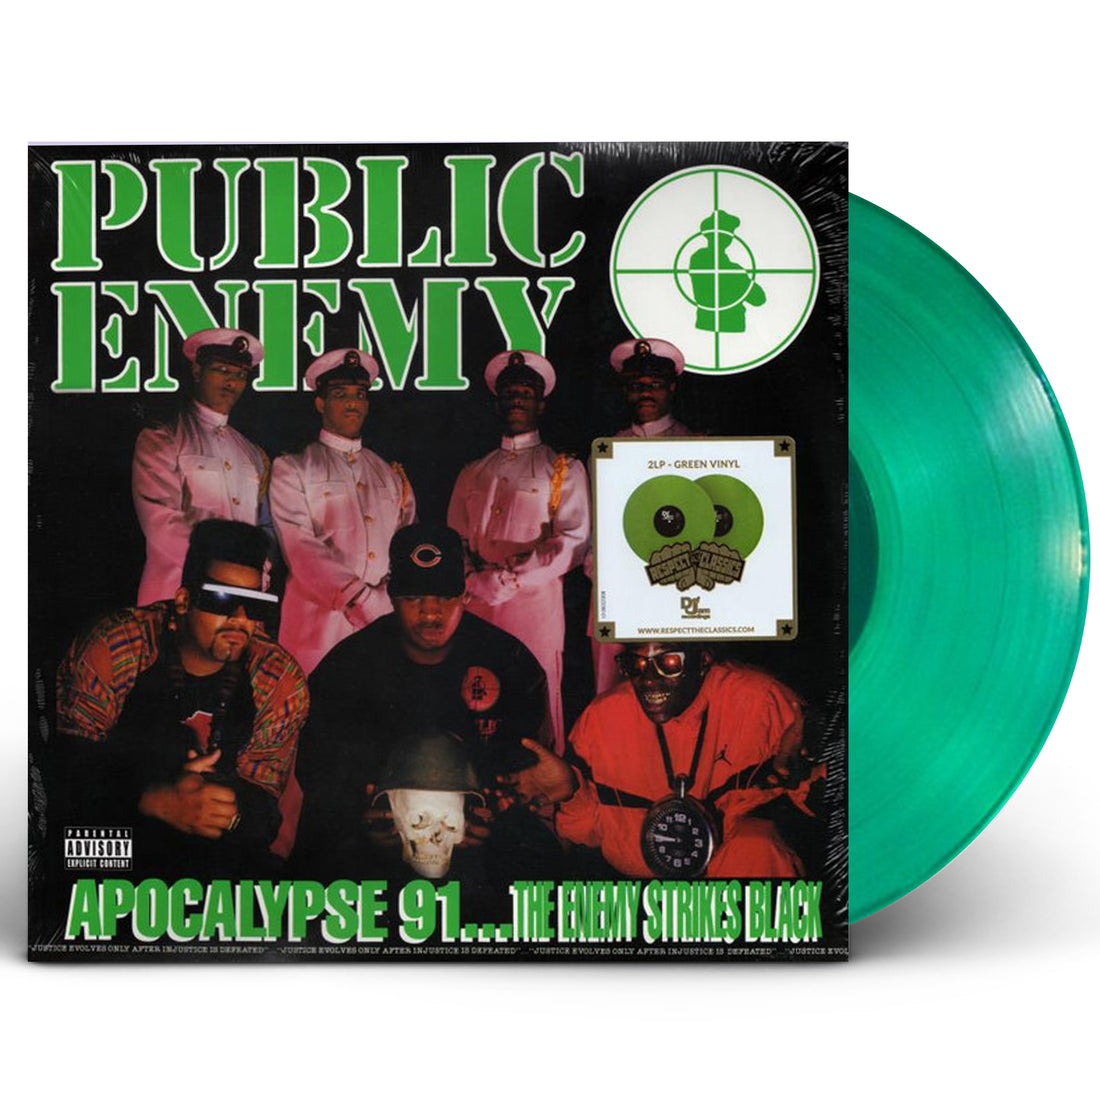 Public Enemy "Apocalypse 91... The Enemy Strikes Black" LP Green Vinyl